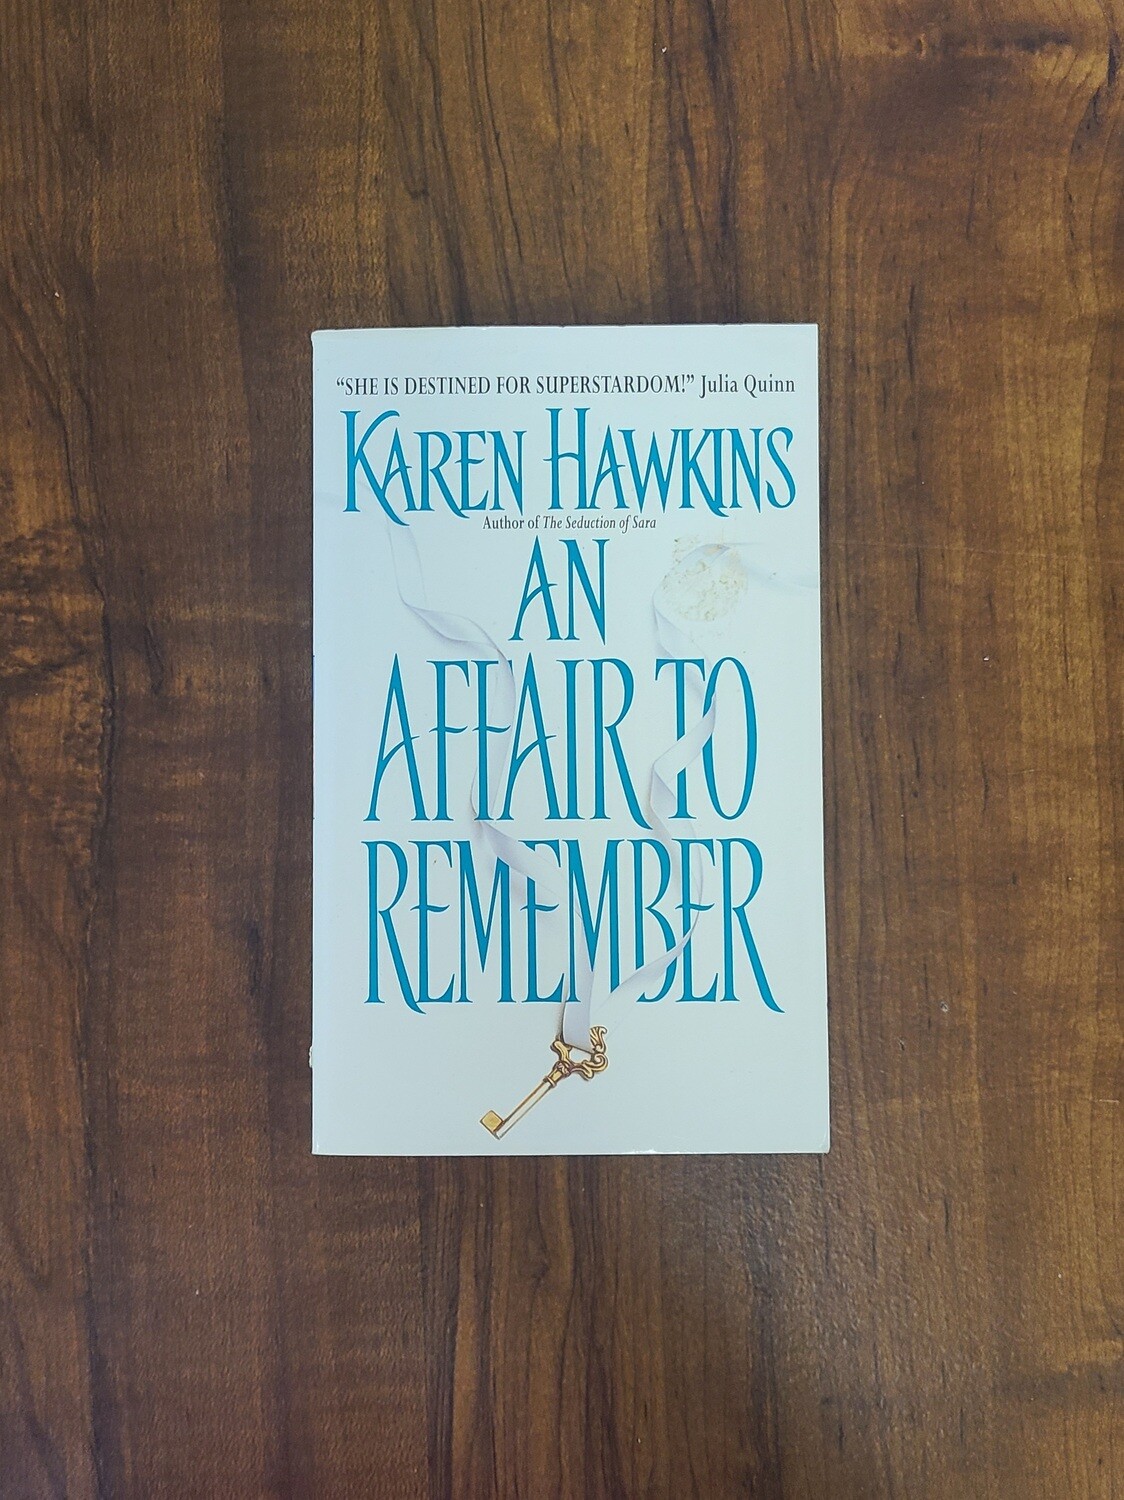 An Affair to Remember by Karen Hawkins